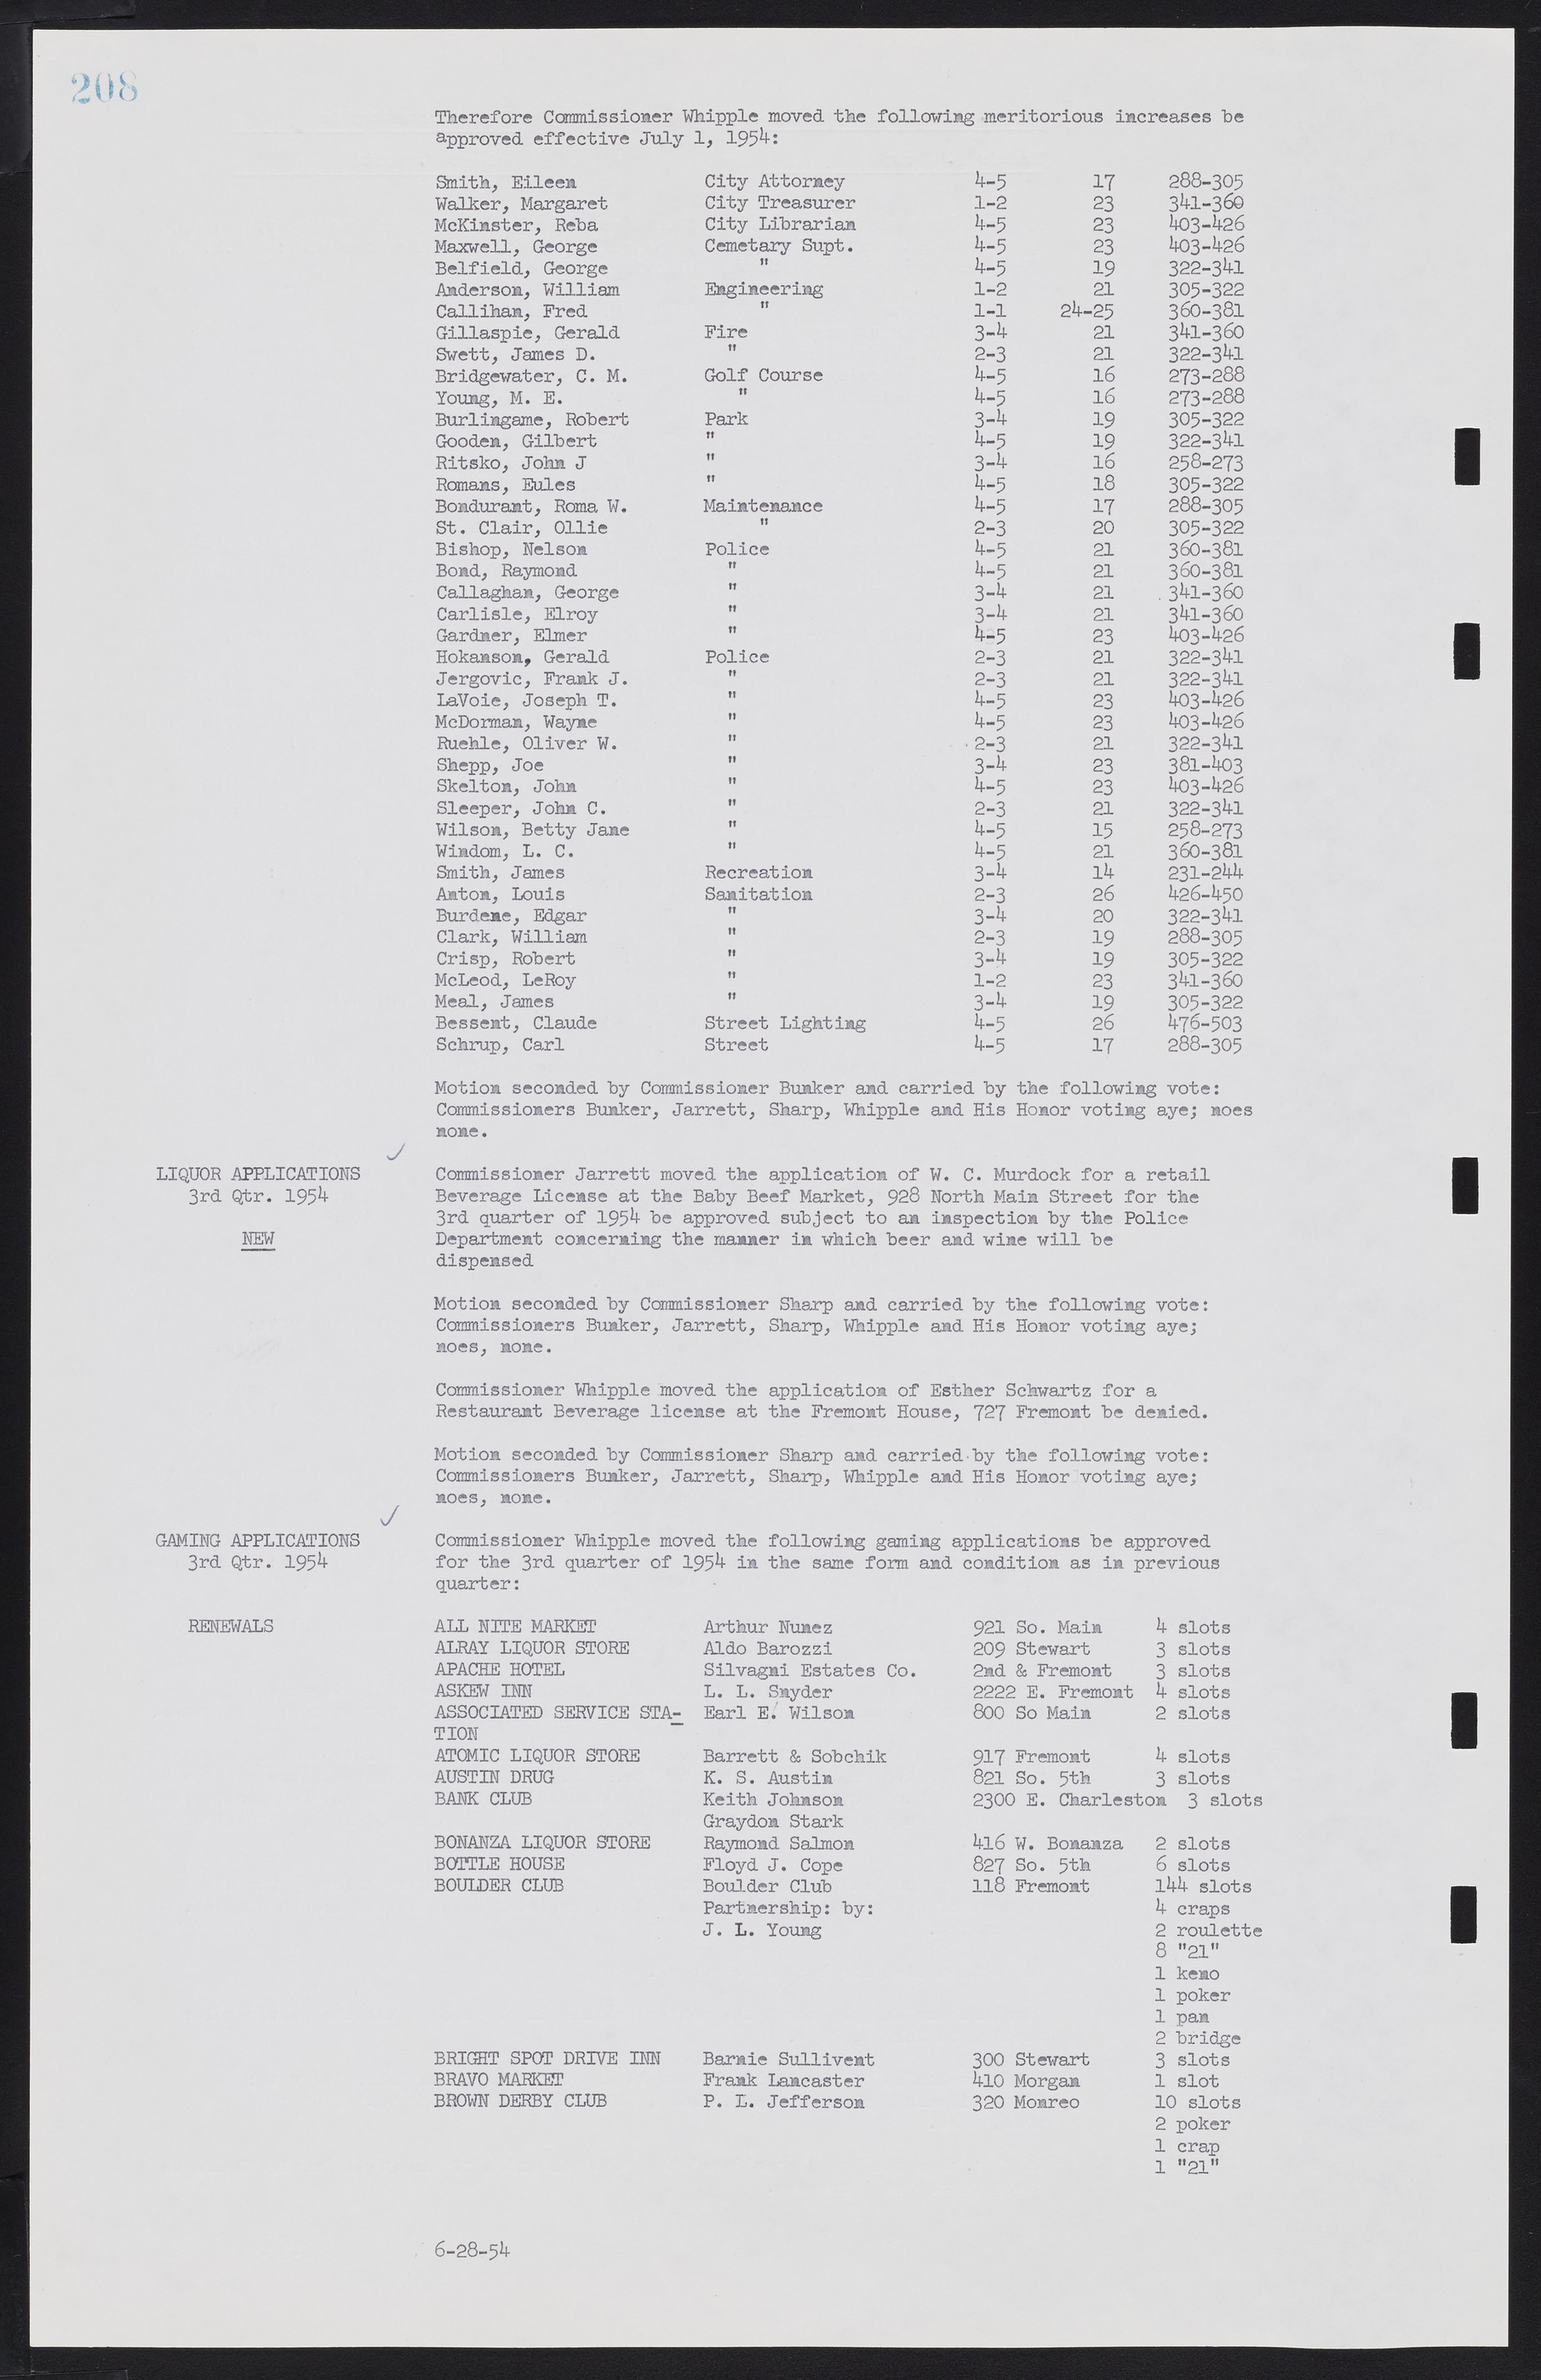 Las Vegas City Commission Minutes, February 17, 1954 to September 21, 1955, lvc000009-214